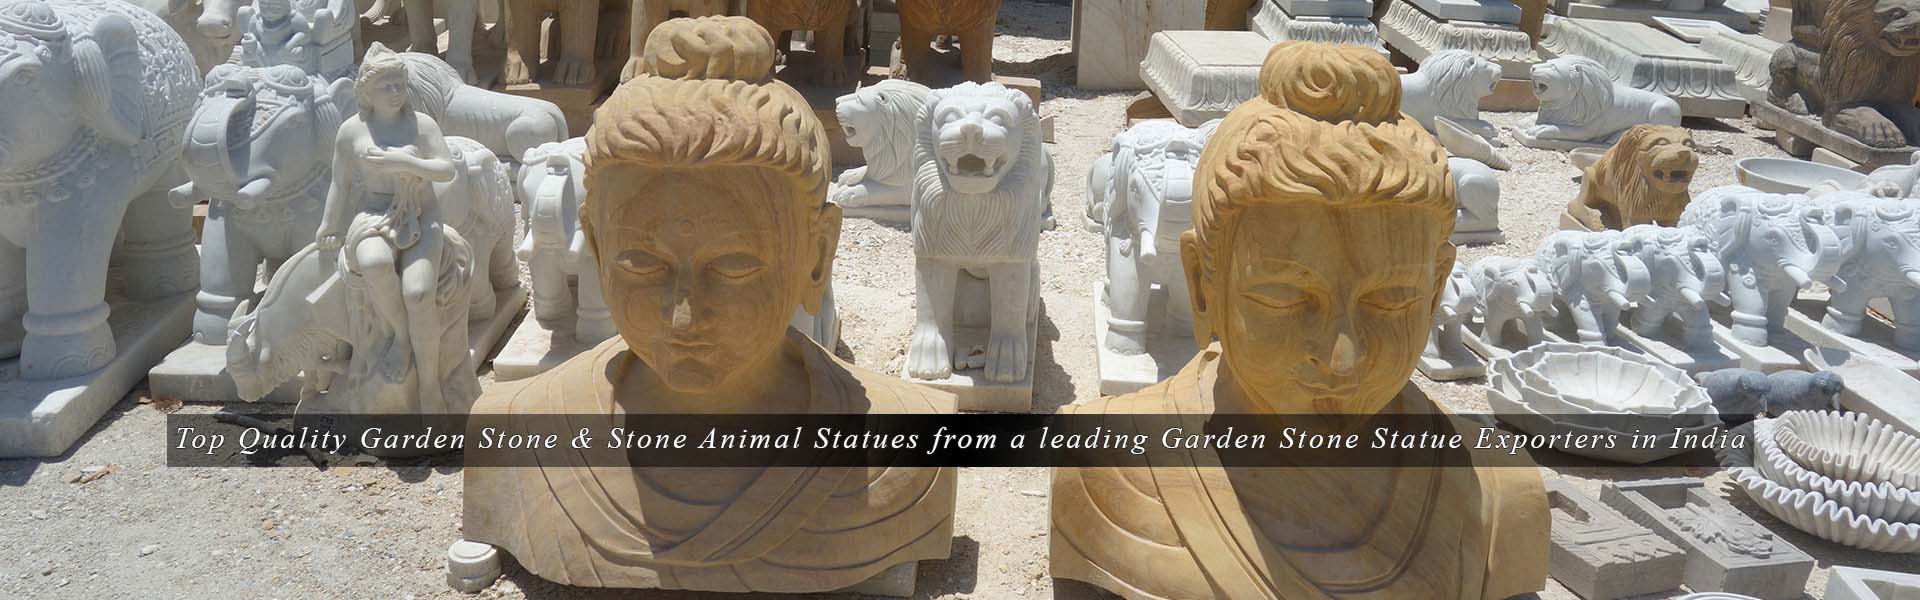 Stone Garden Statues Exporters India